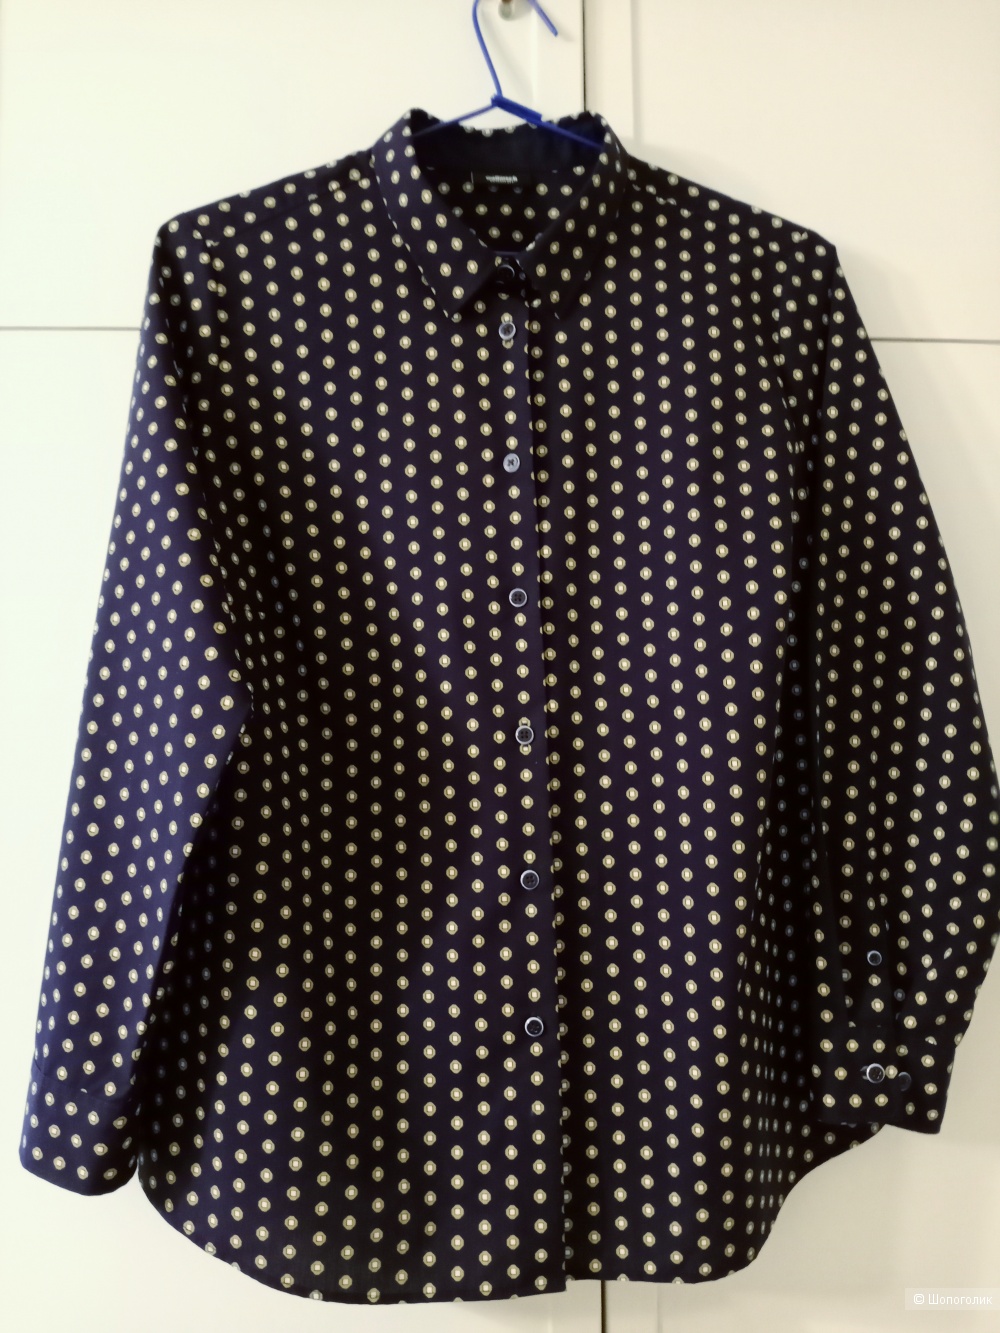 Блуза, рубашка Walbusch, 50-52